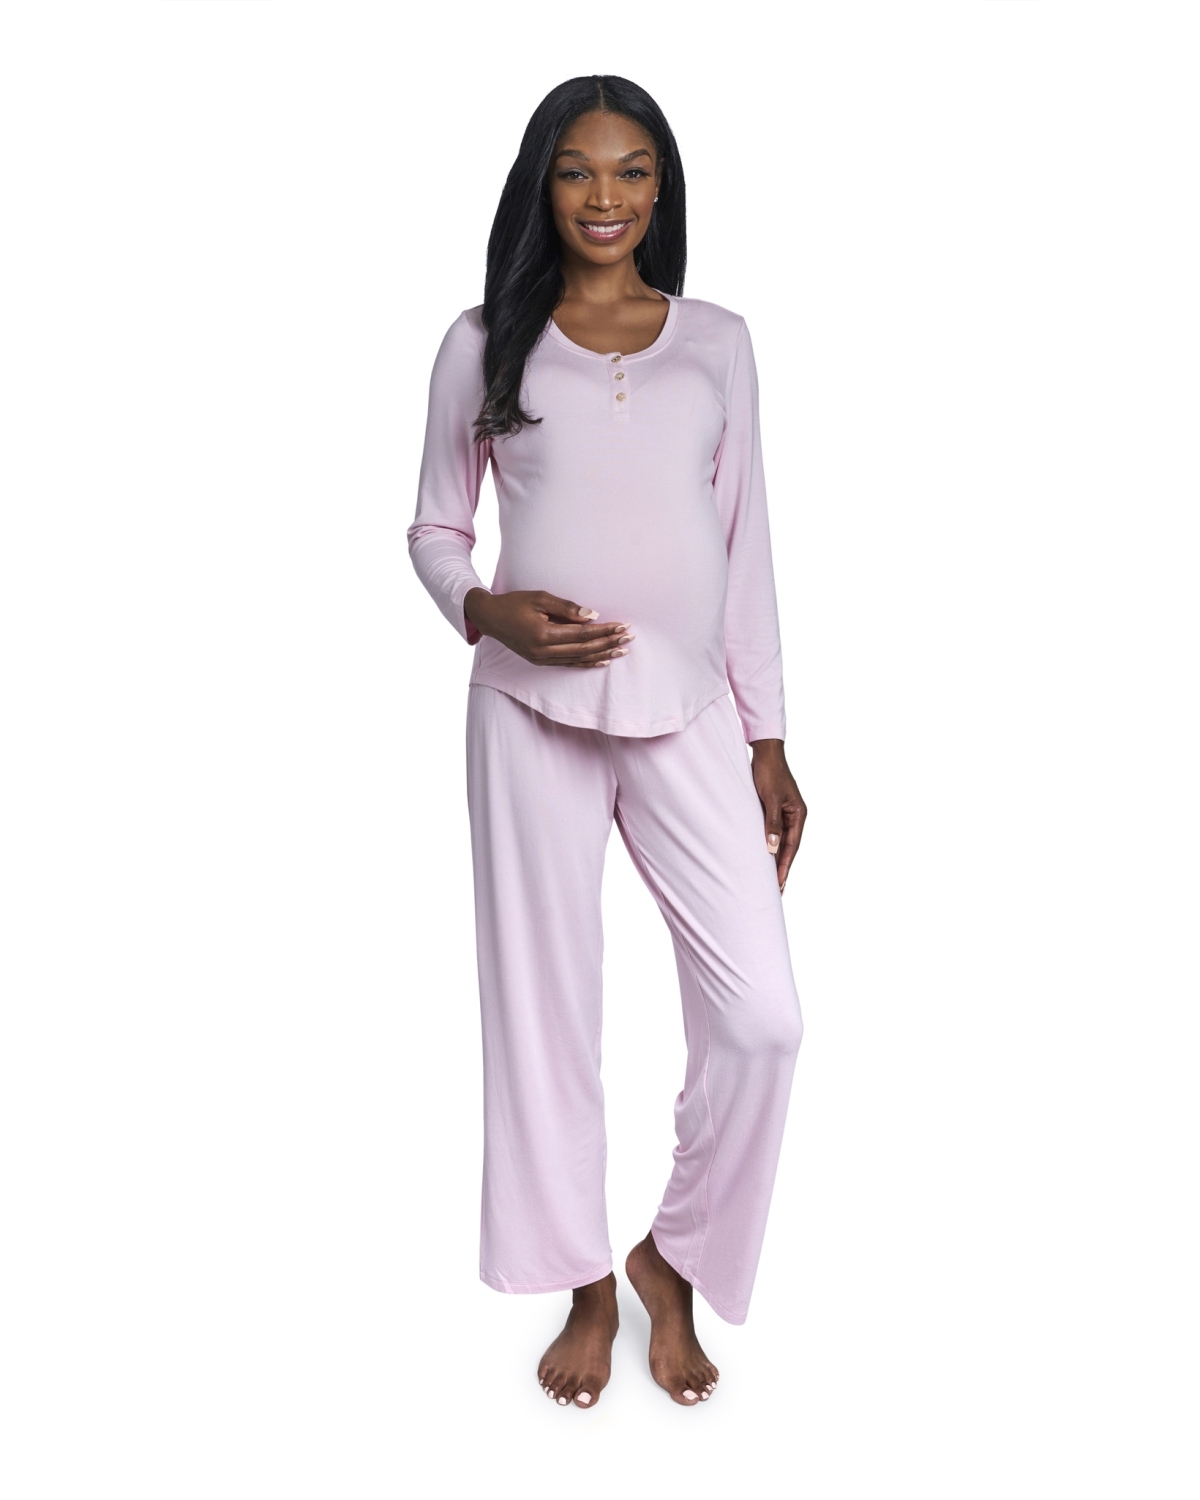 Maternity Laina Top & Pants /Nursing Pajama Set - Heather grey solid